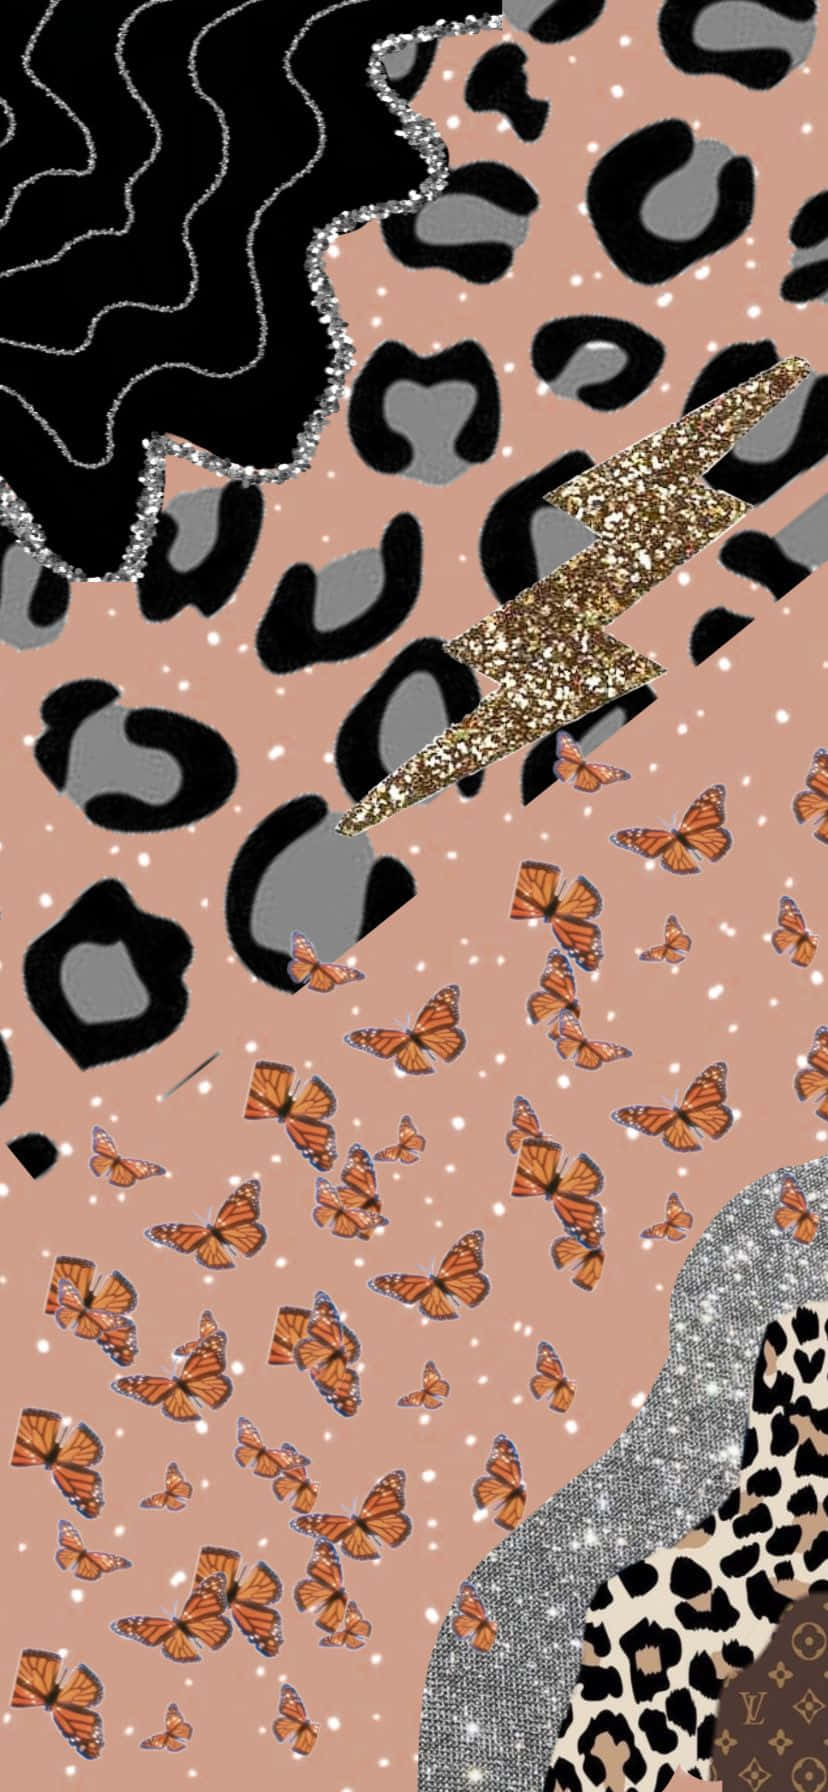 Leopard Butterfly Glitter Aesthetic Collage Wallpaper